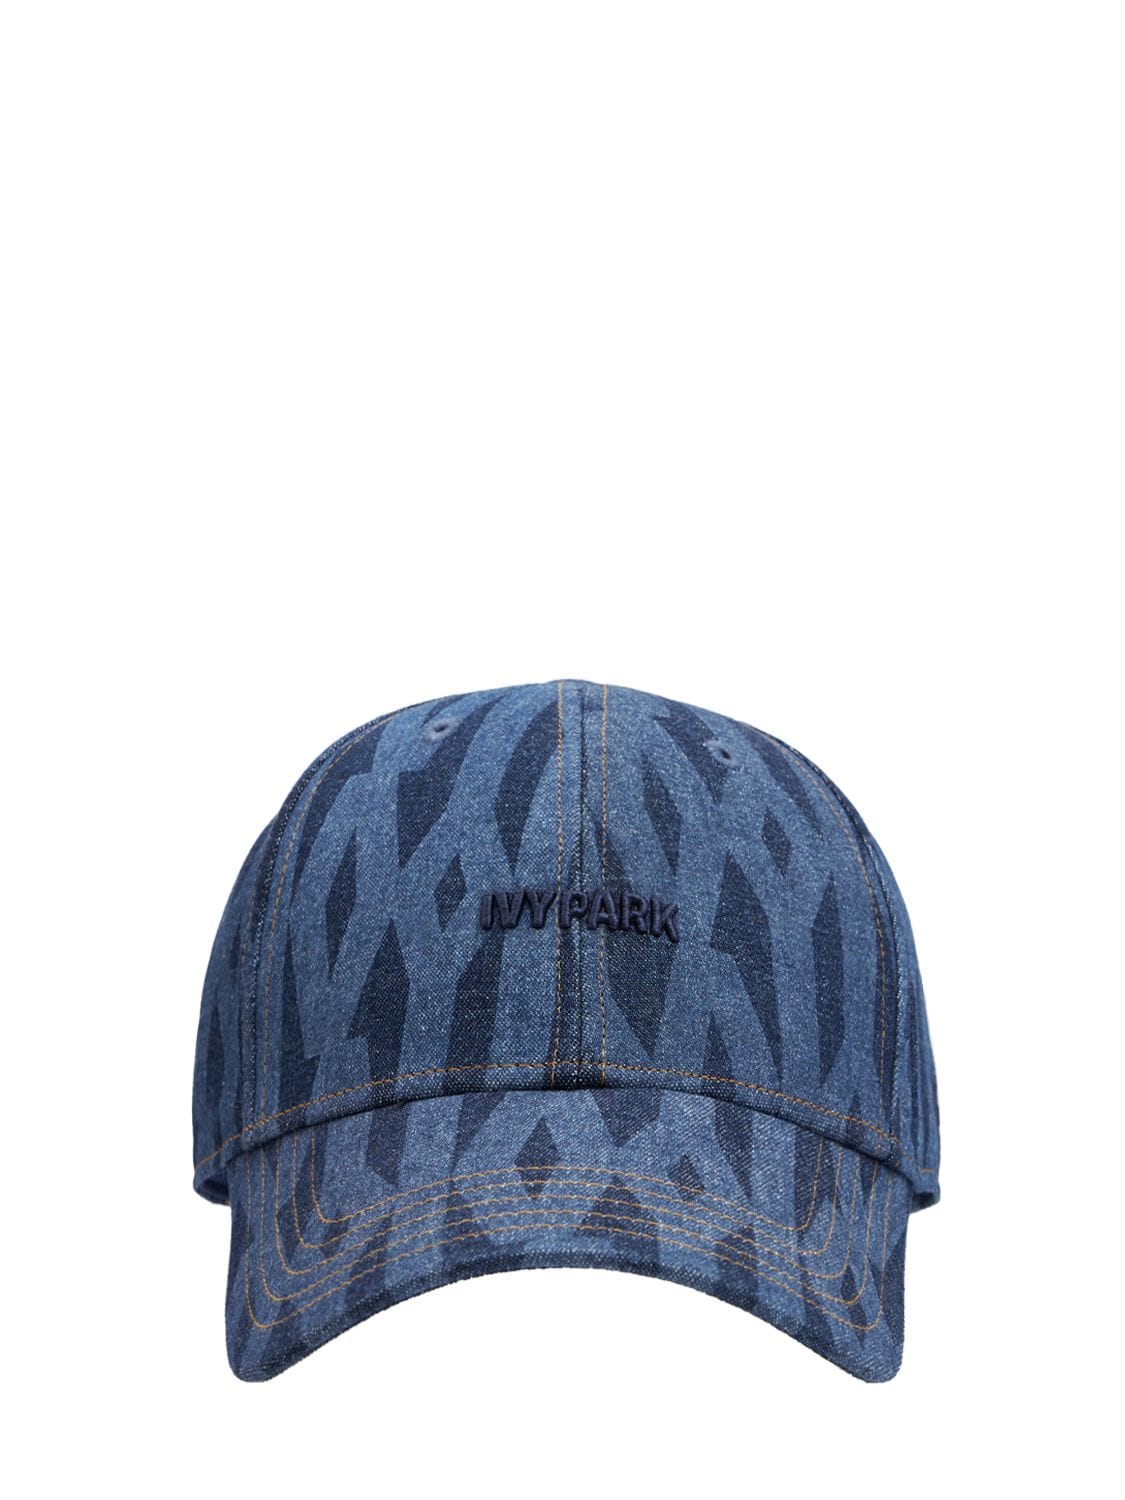 Adidas X Ivy Park Ivy Park Monogram Denim Baseball Hat In Blue | ModeSens